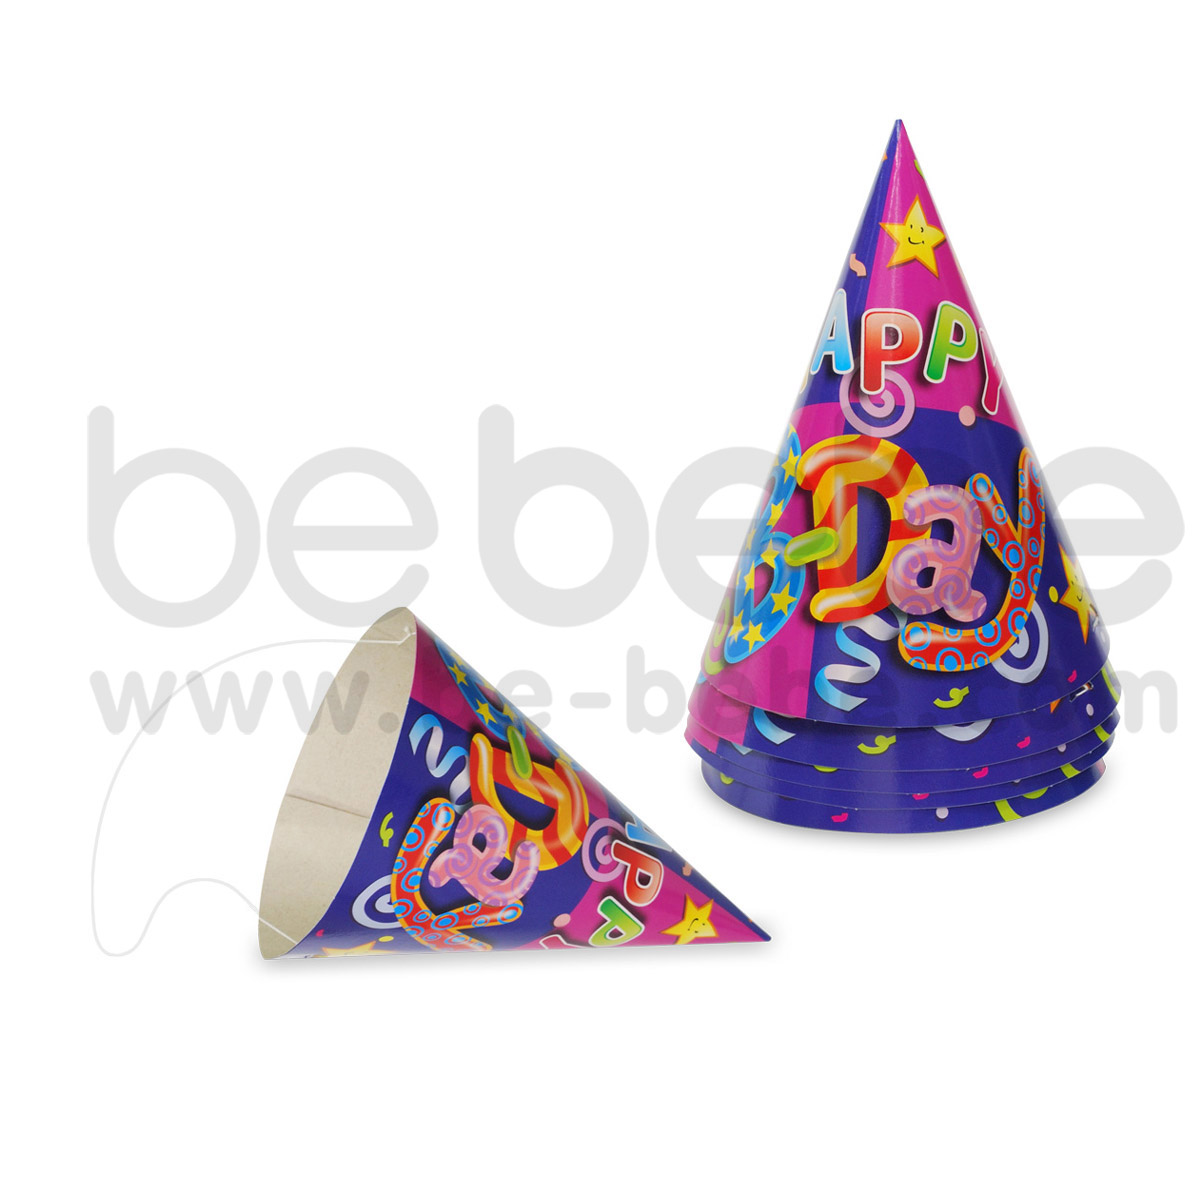 PARTY BUG : หมวกโคนปาร์ตี้ 6 inch.x 1 Pack คุณภาพสูง* ดีไซน์สวยงาม ได้มาตรฐานEN71*ปลอดภัย ECO*เป็นมิตรกับสิ่งแวดล้อม